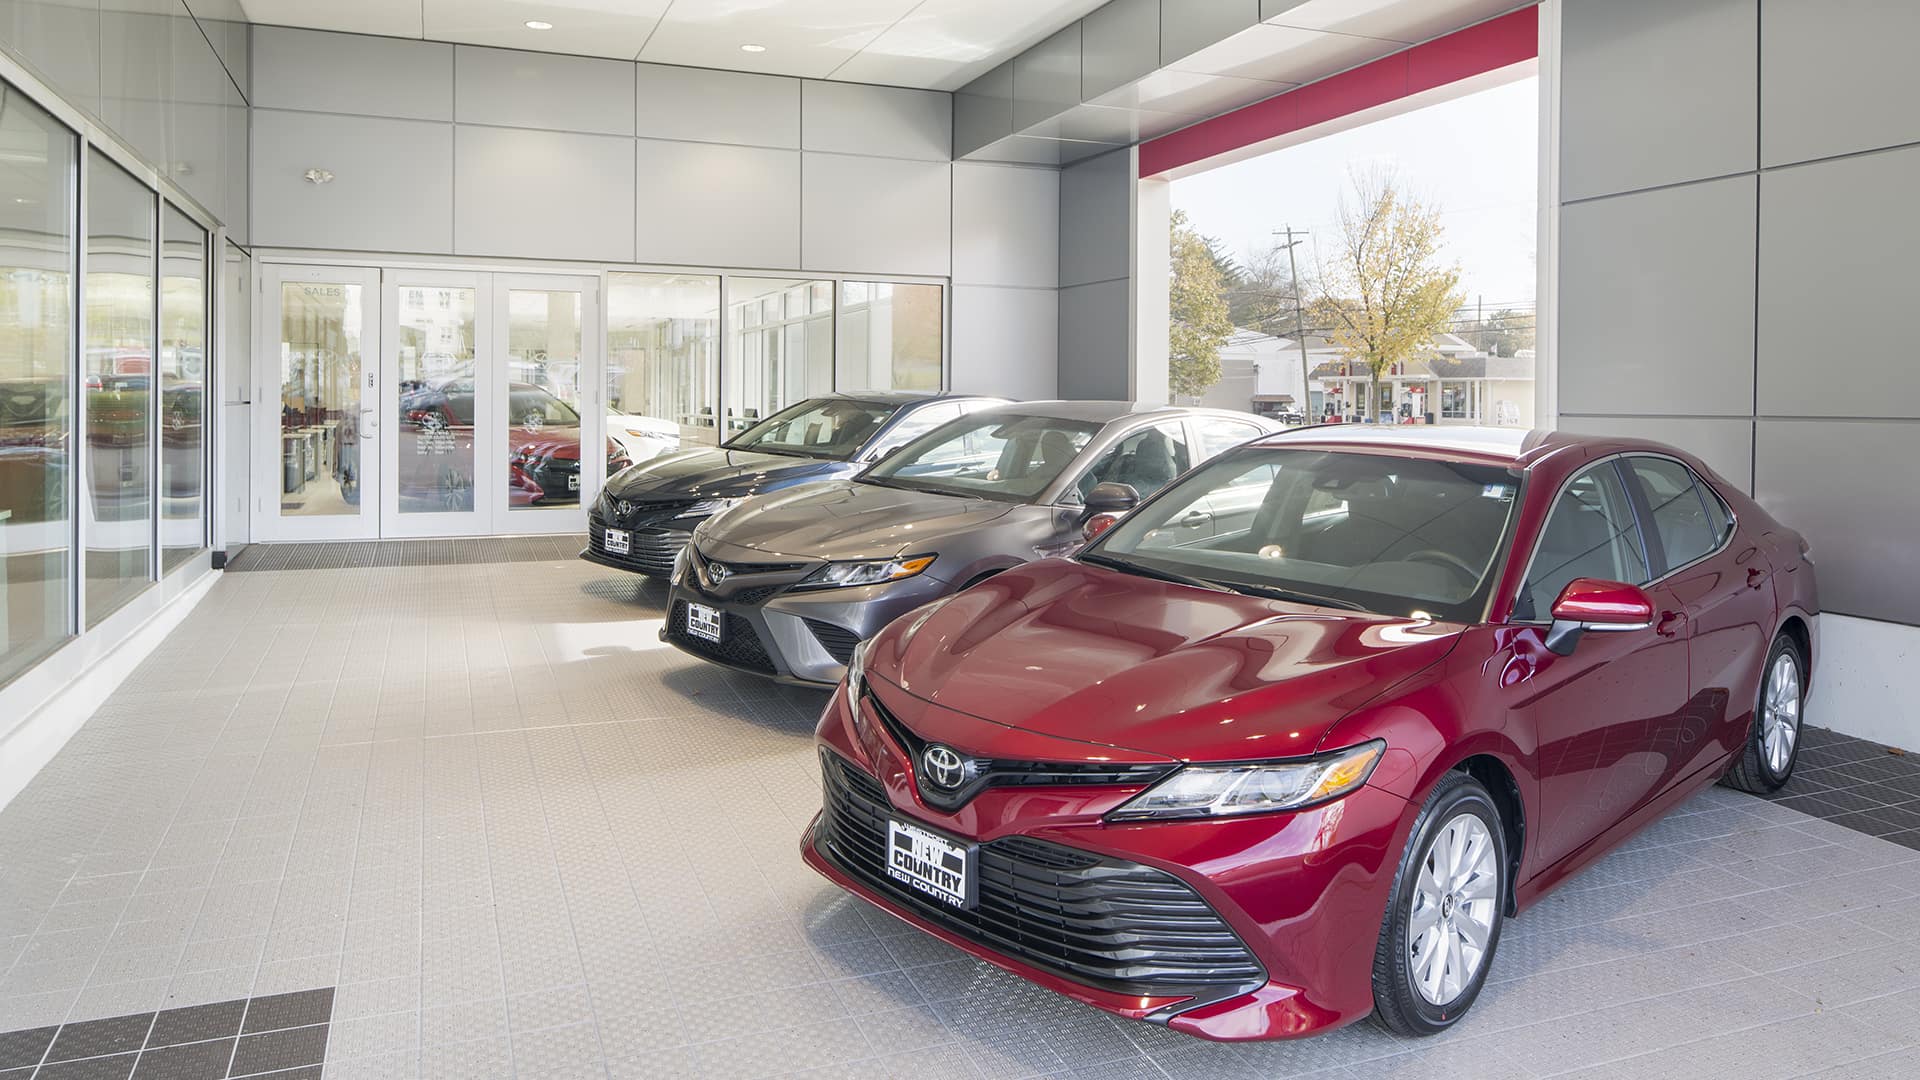 interior shot of New Country Toyota of Westport showroom